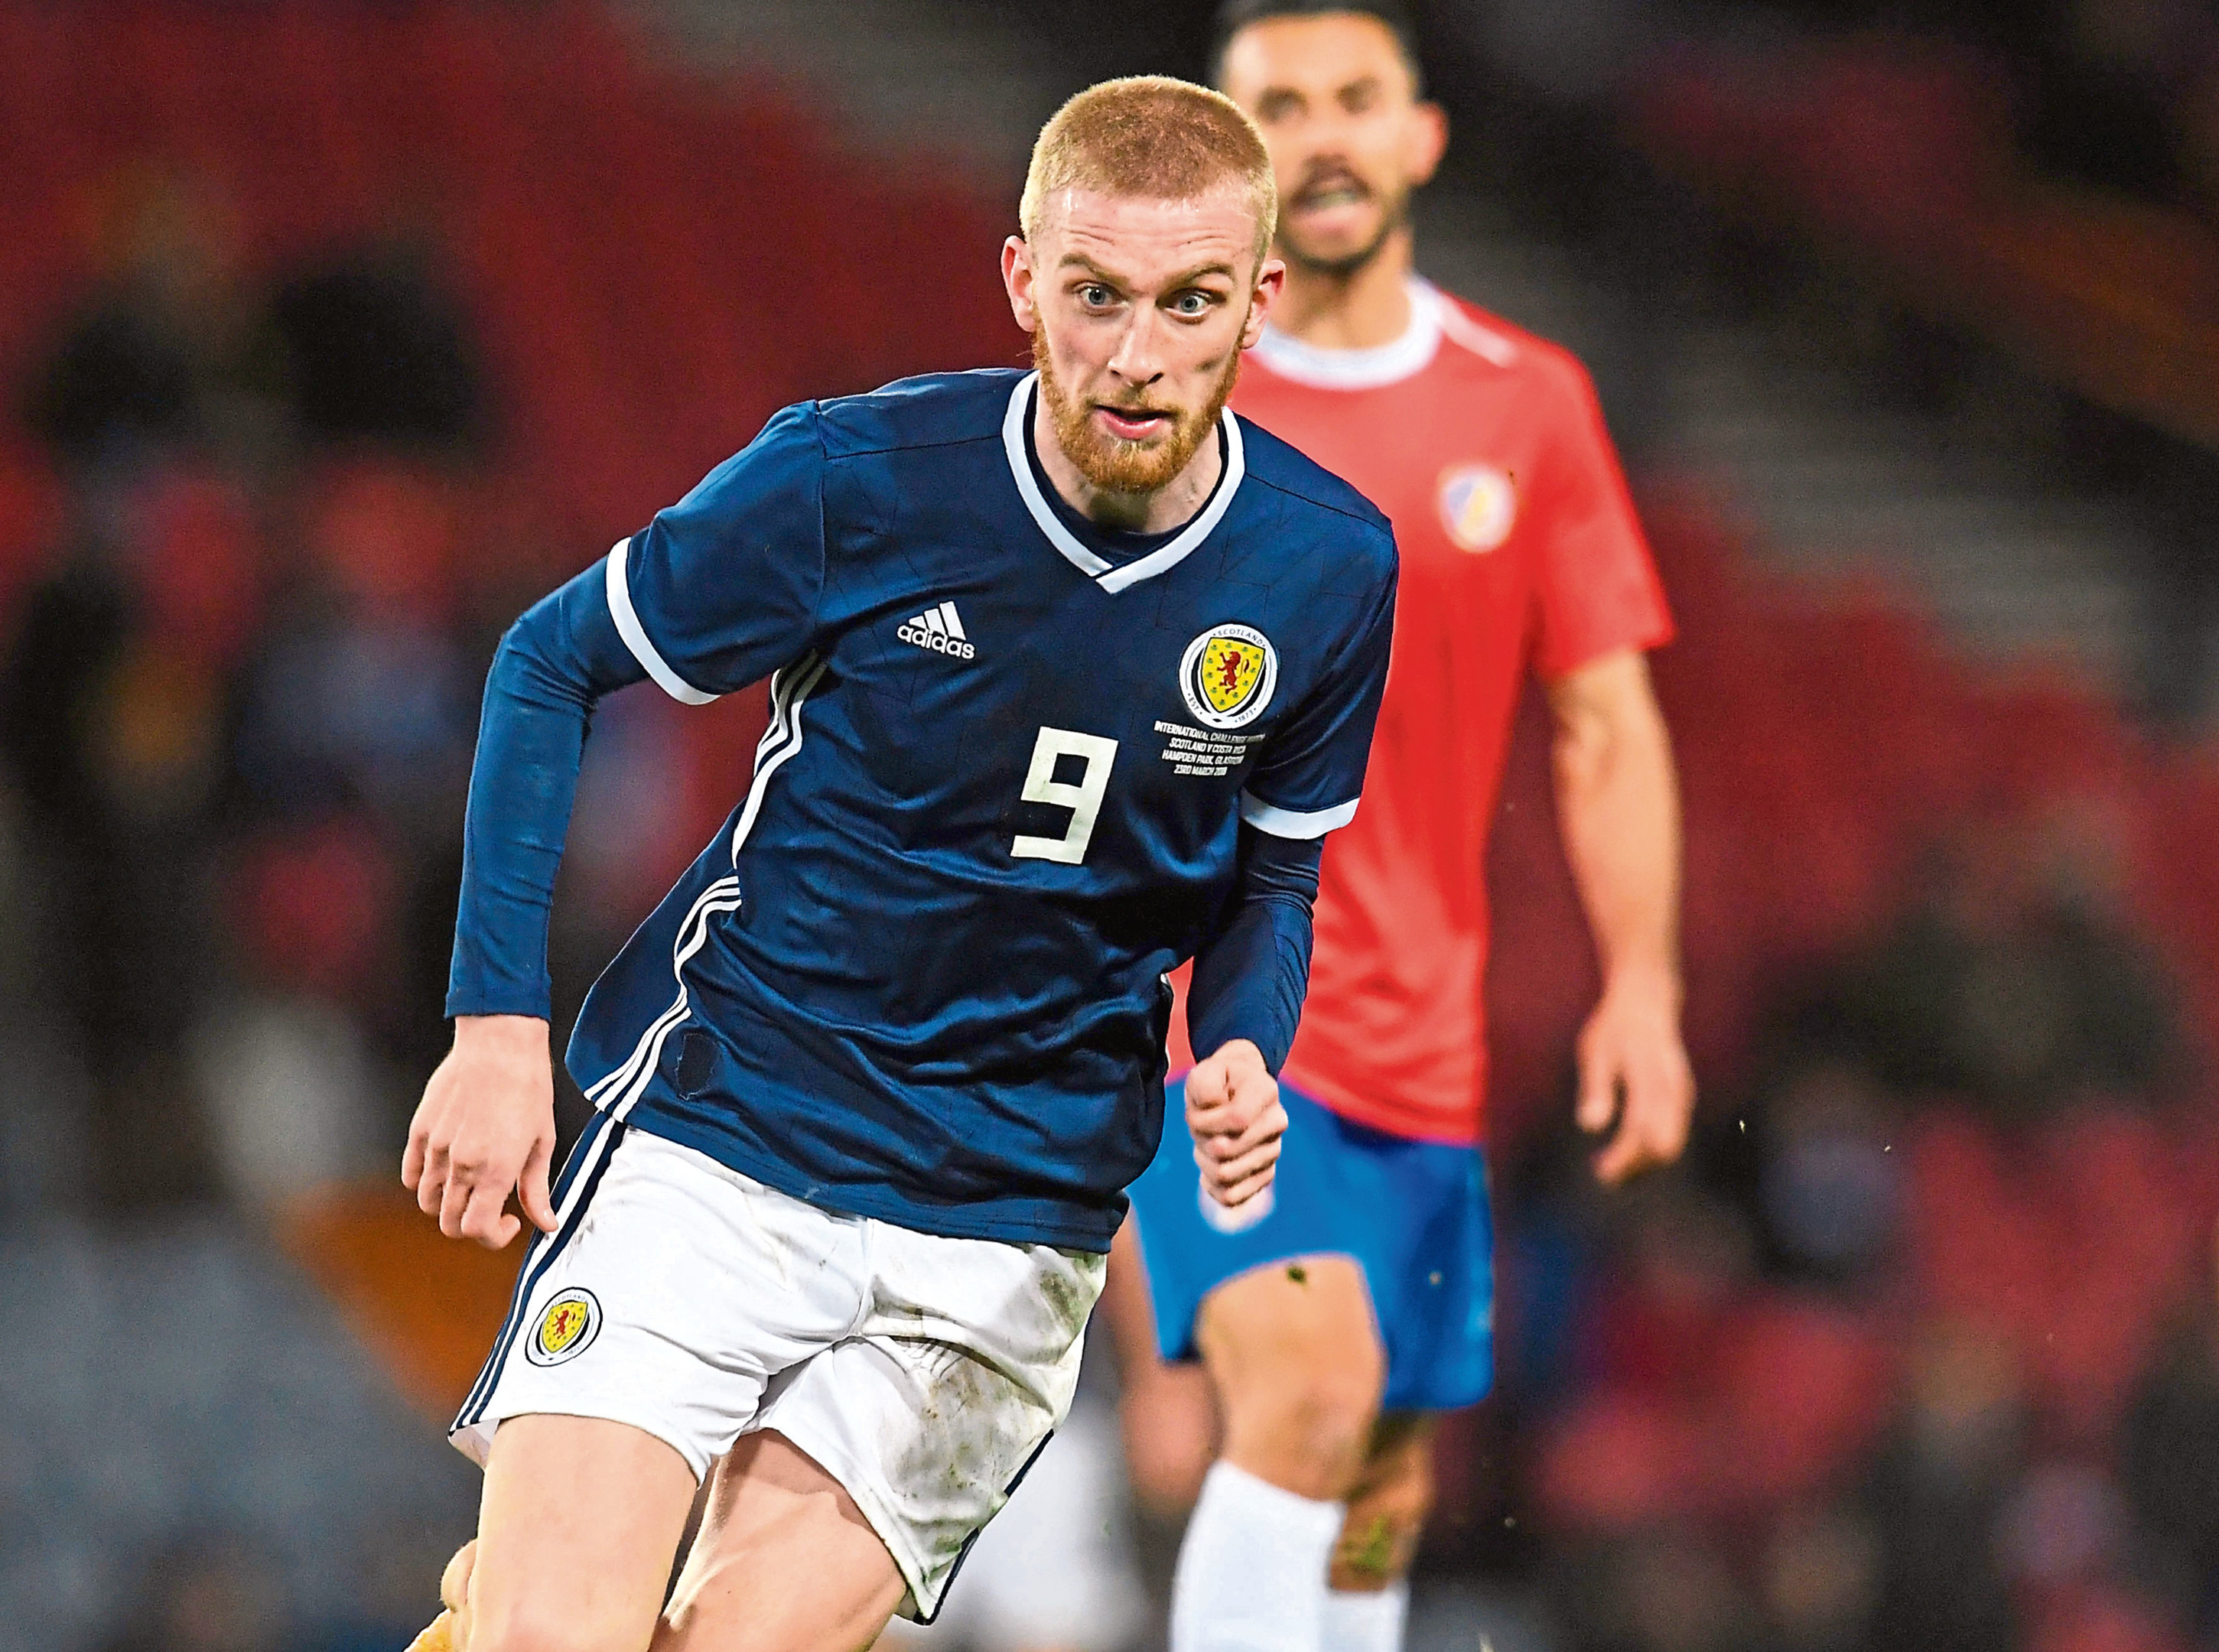 Scotland forward Oli McBurnie